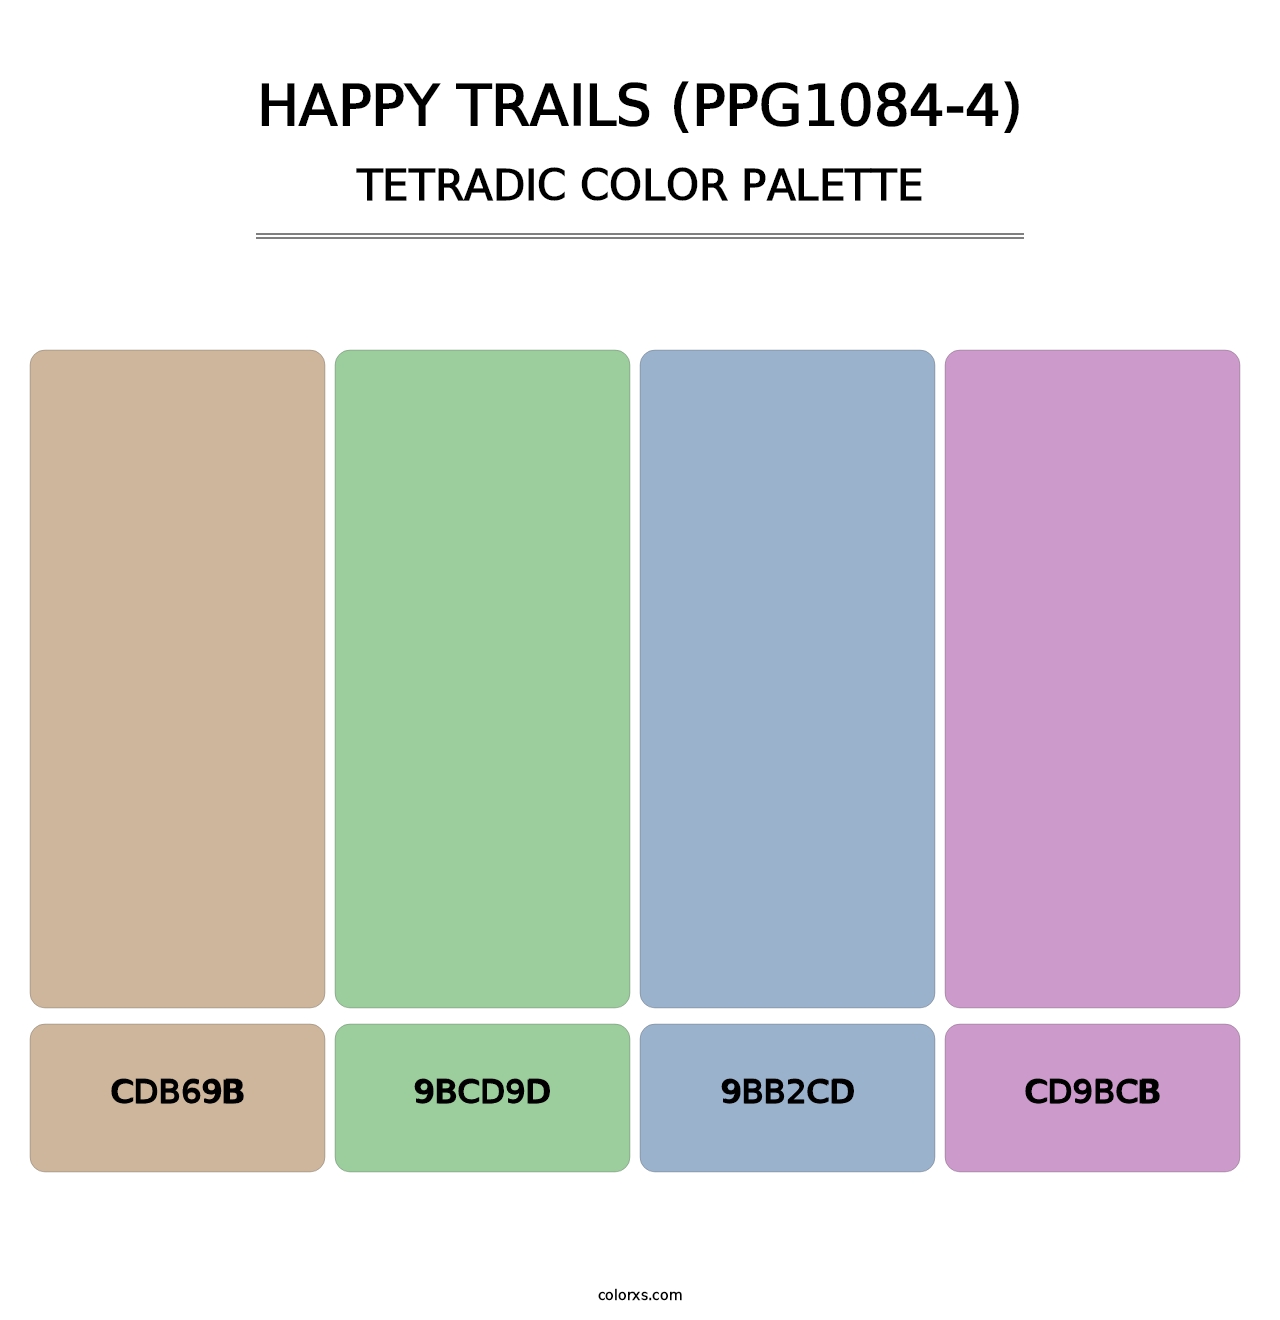 Happy Trails (PPG1084-4) - Tetradic Color Palette